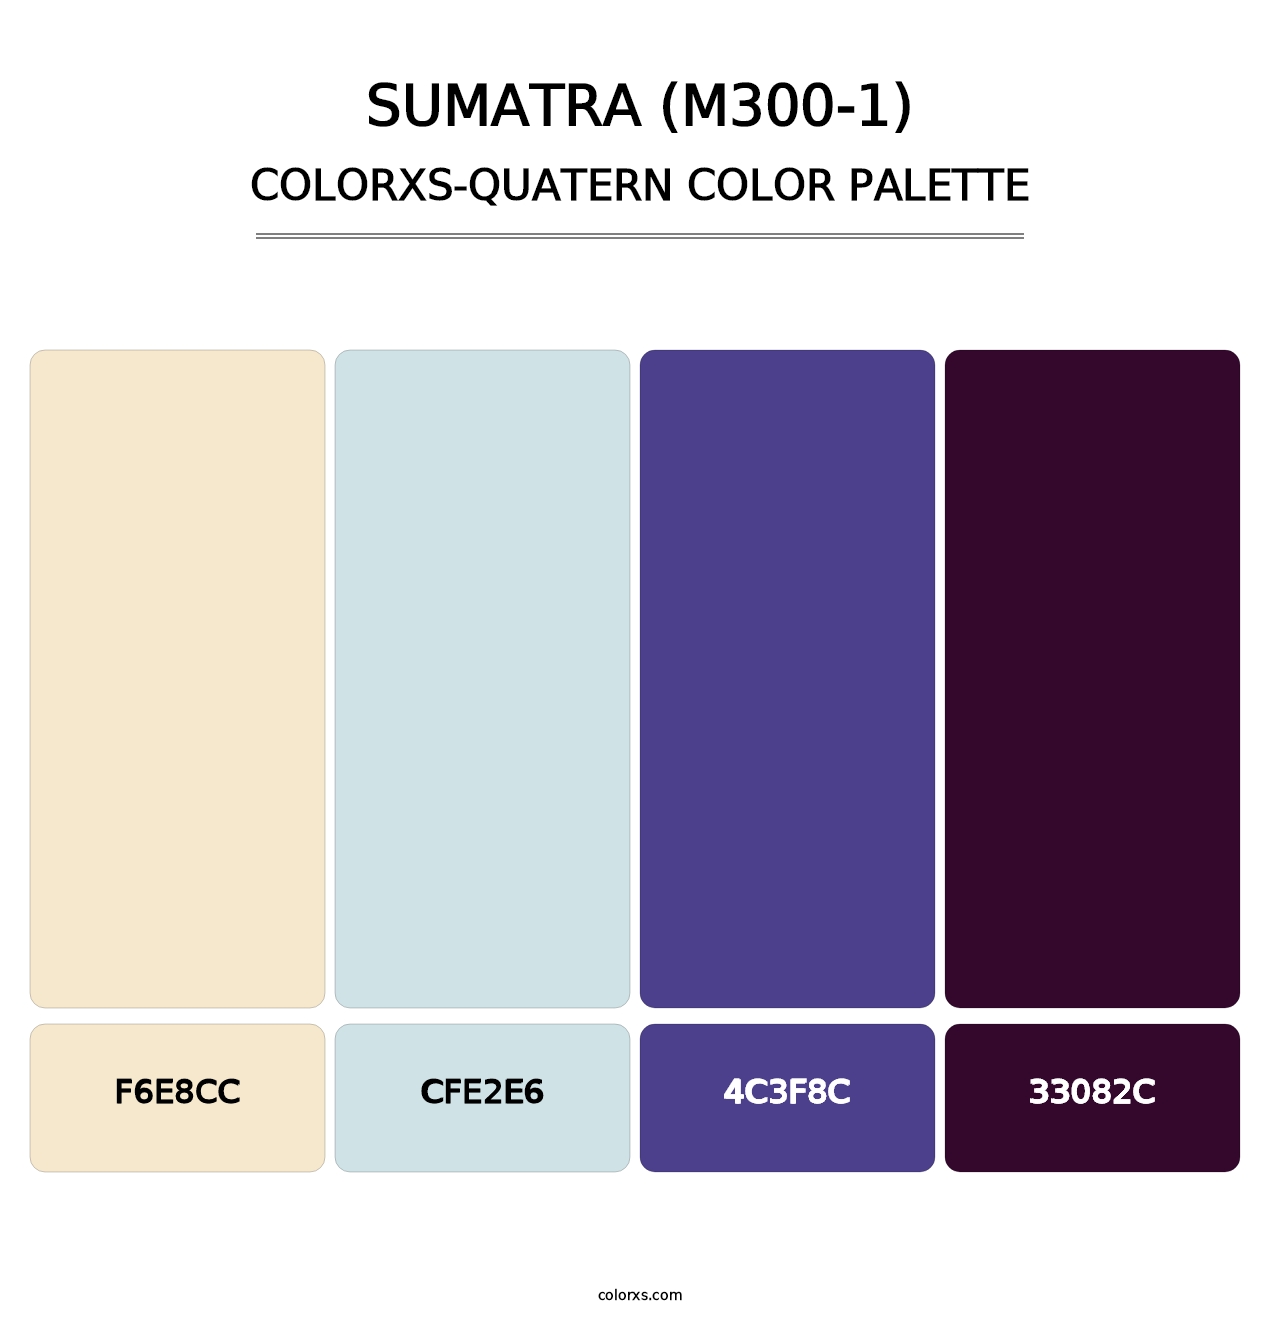 Sumatra (M300-1) - Colorxs Quatern Palette